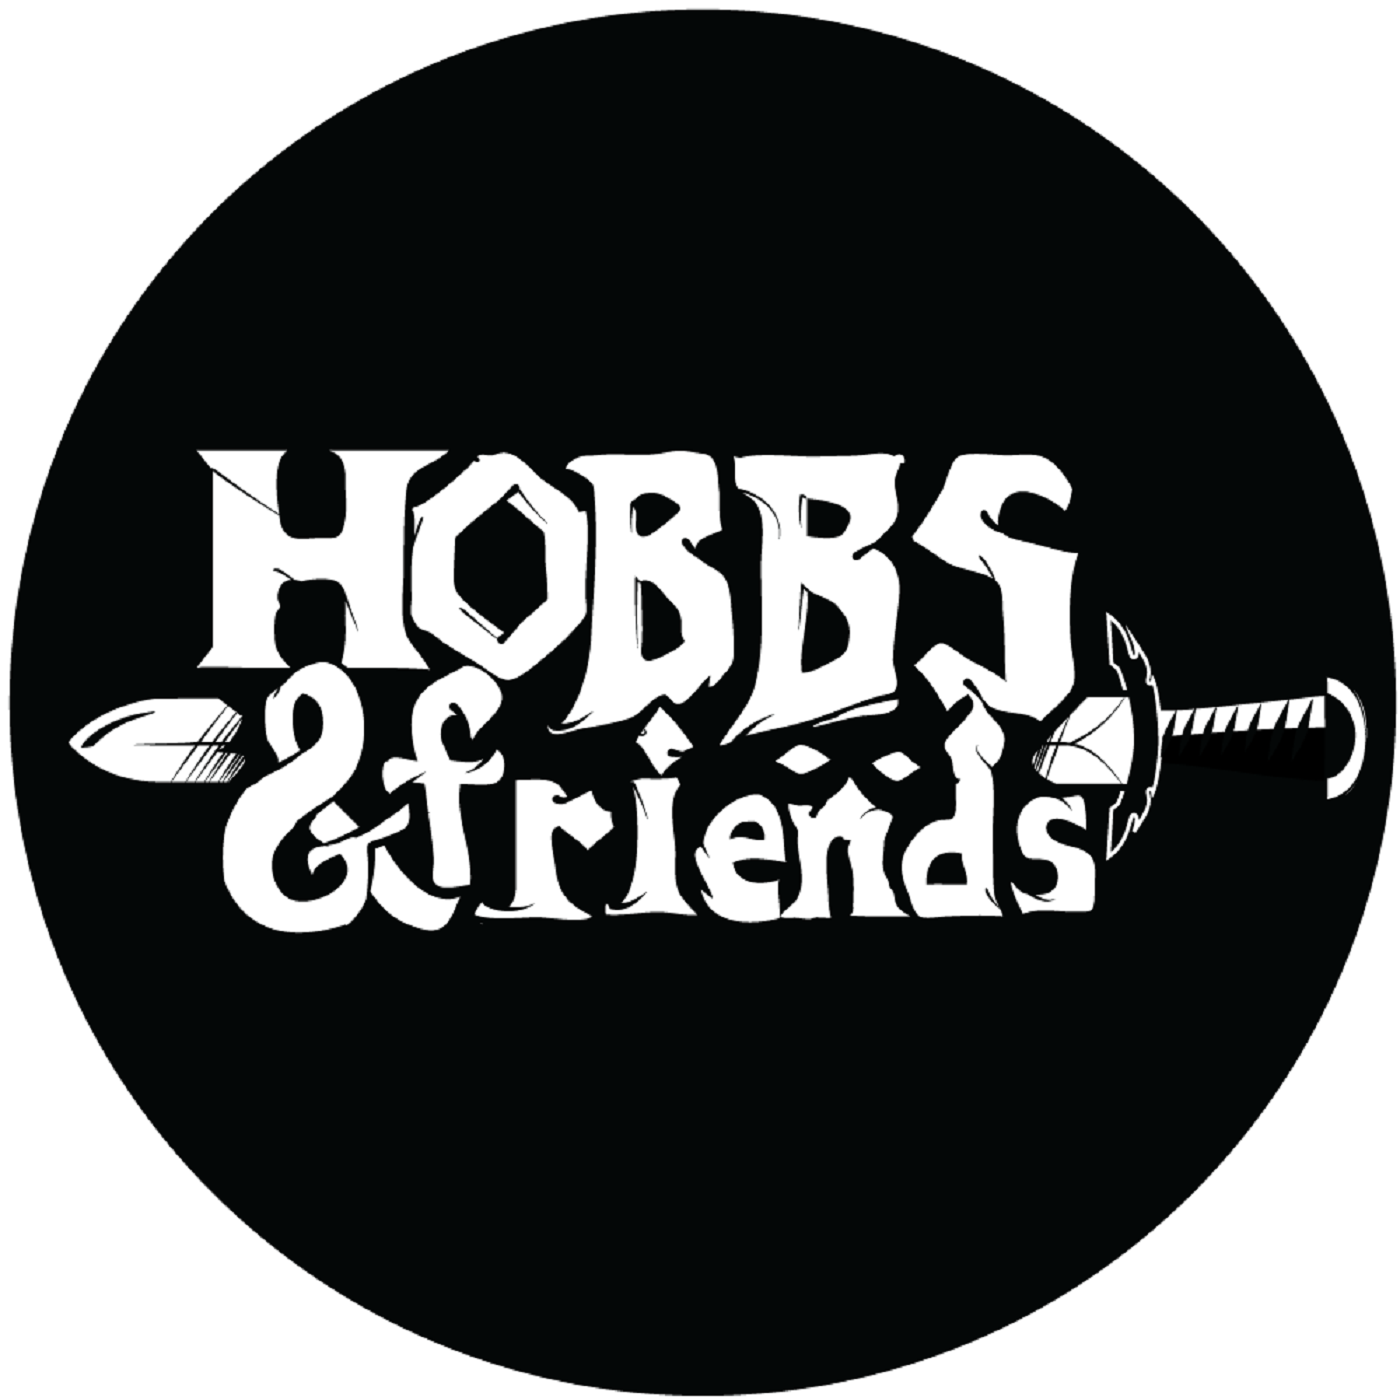 Hobbs & Friends